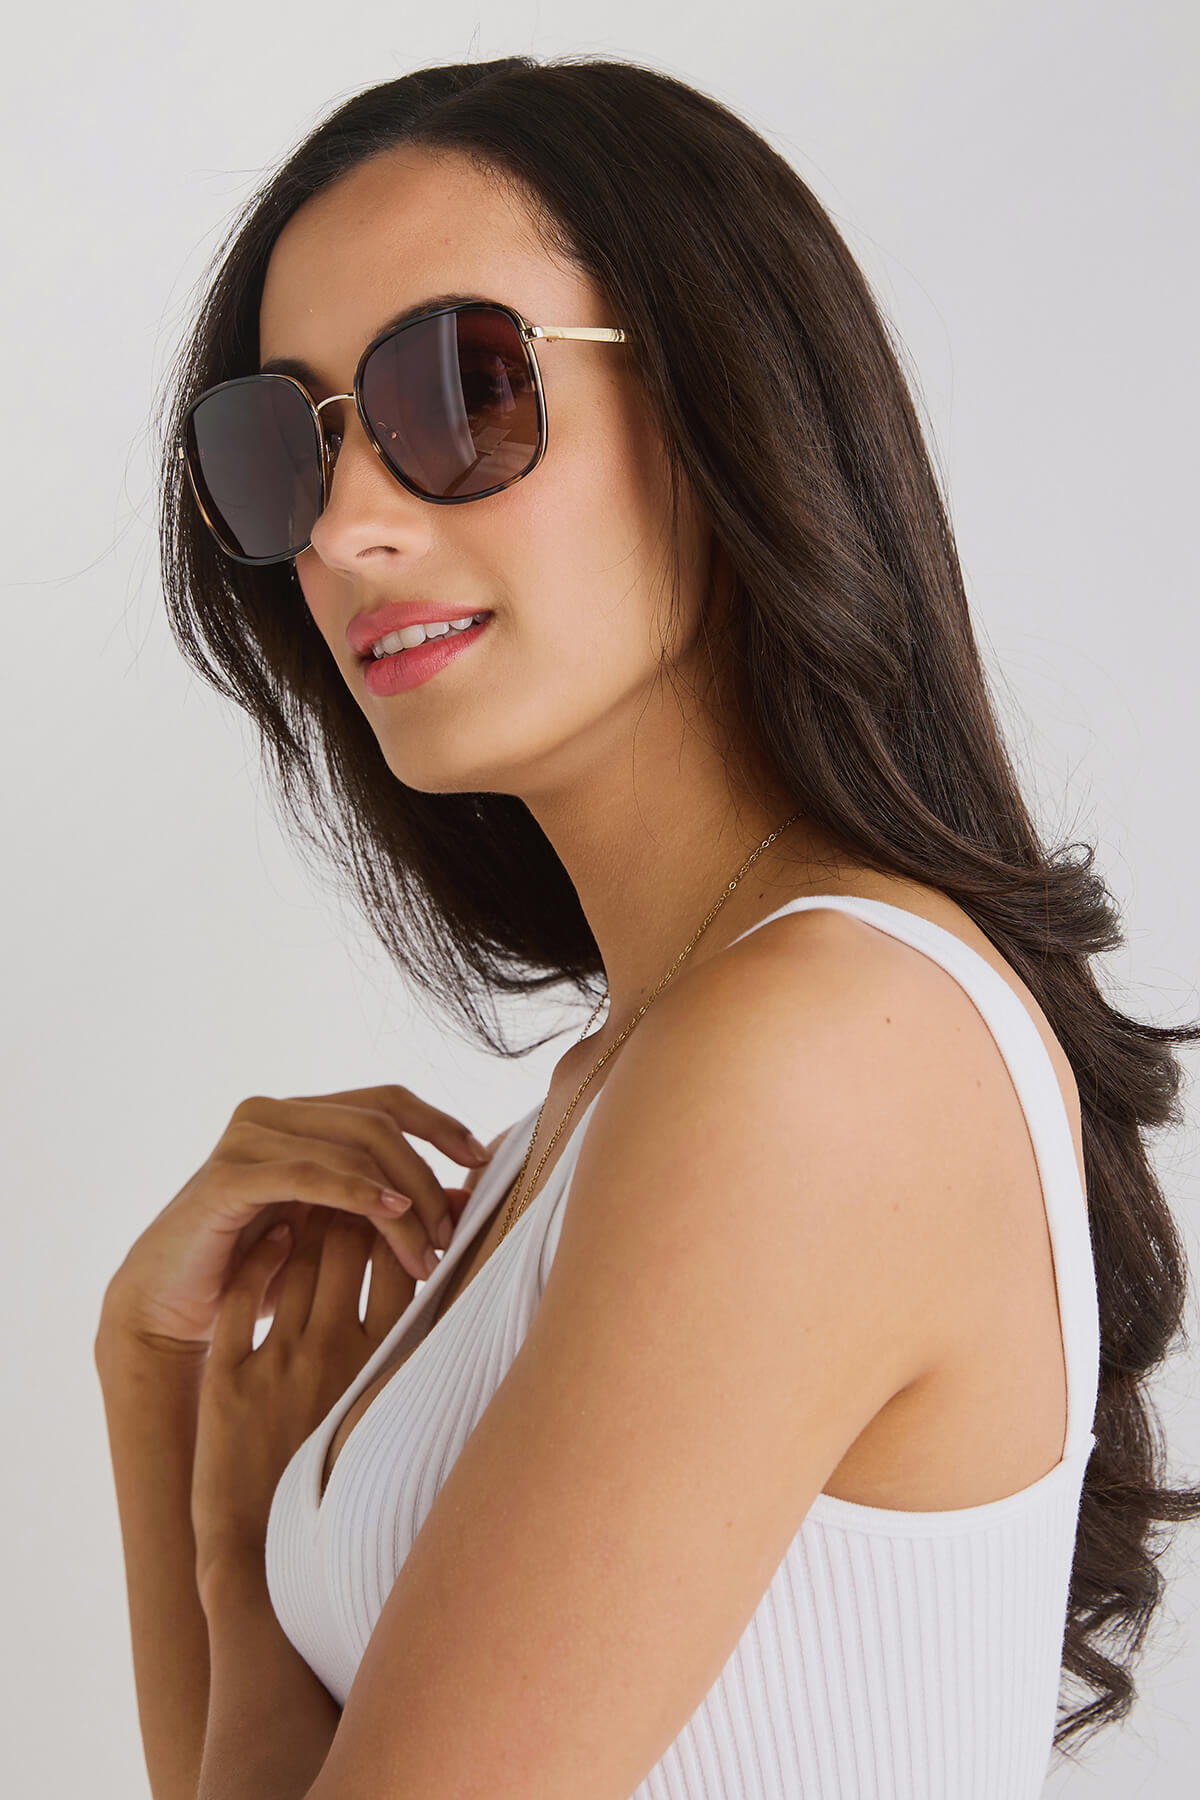 Buy Z-ZOOM Rectangular Polarised Unisex Sunglasses (Black) at Amazon.in